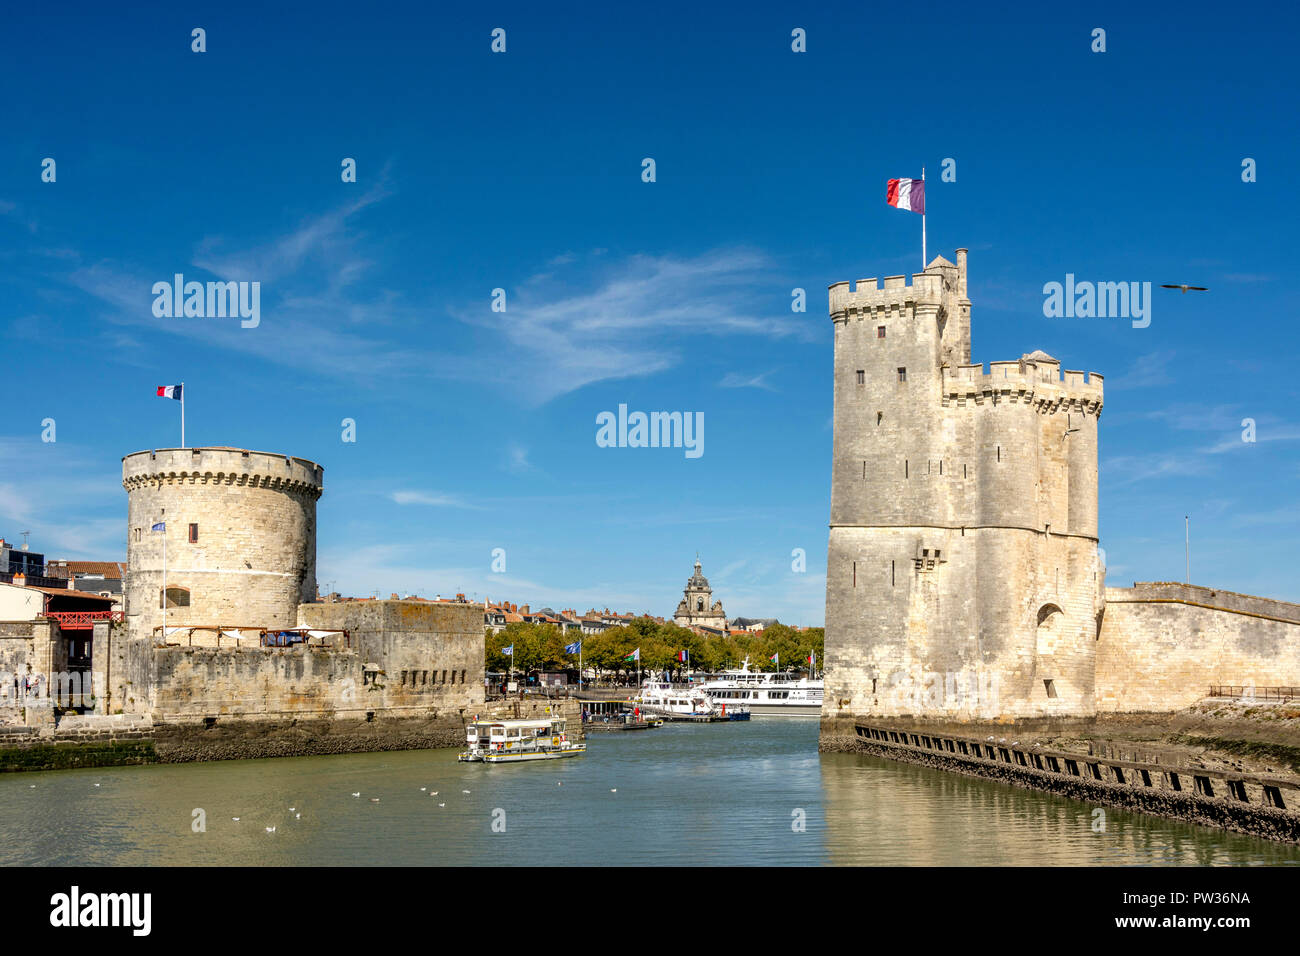 St Nicolas Tower (Tour Saint Nicolas) and The Chain Tower (Tour de la Chaine) at the entrance to the ancient port of La Rochelle, Charente Maritime,   Stock Photo